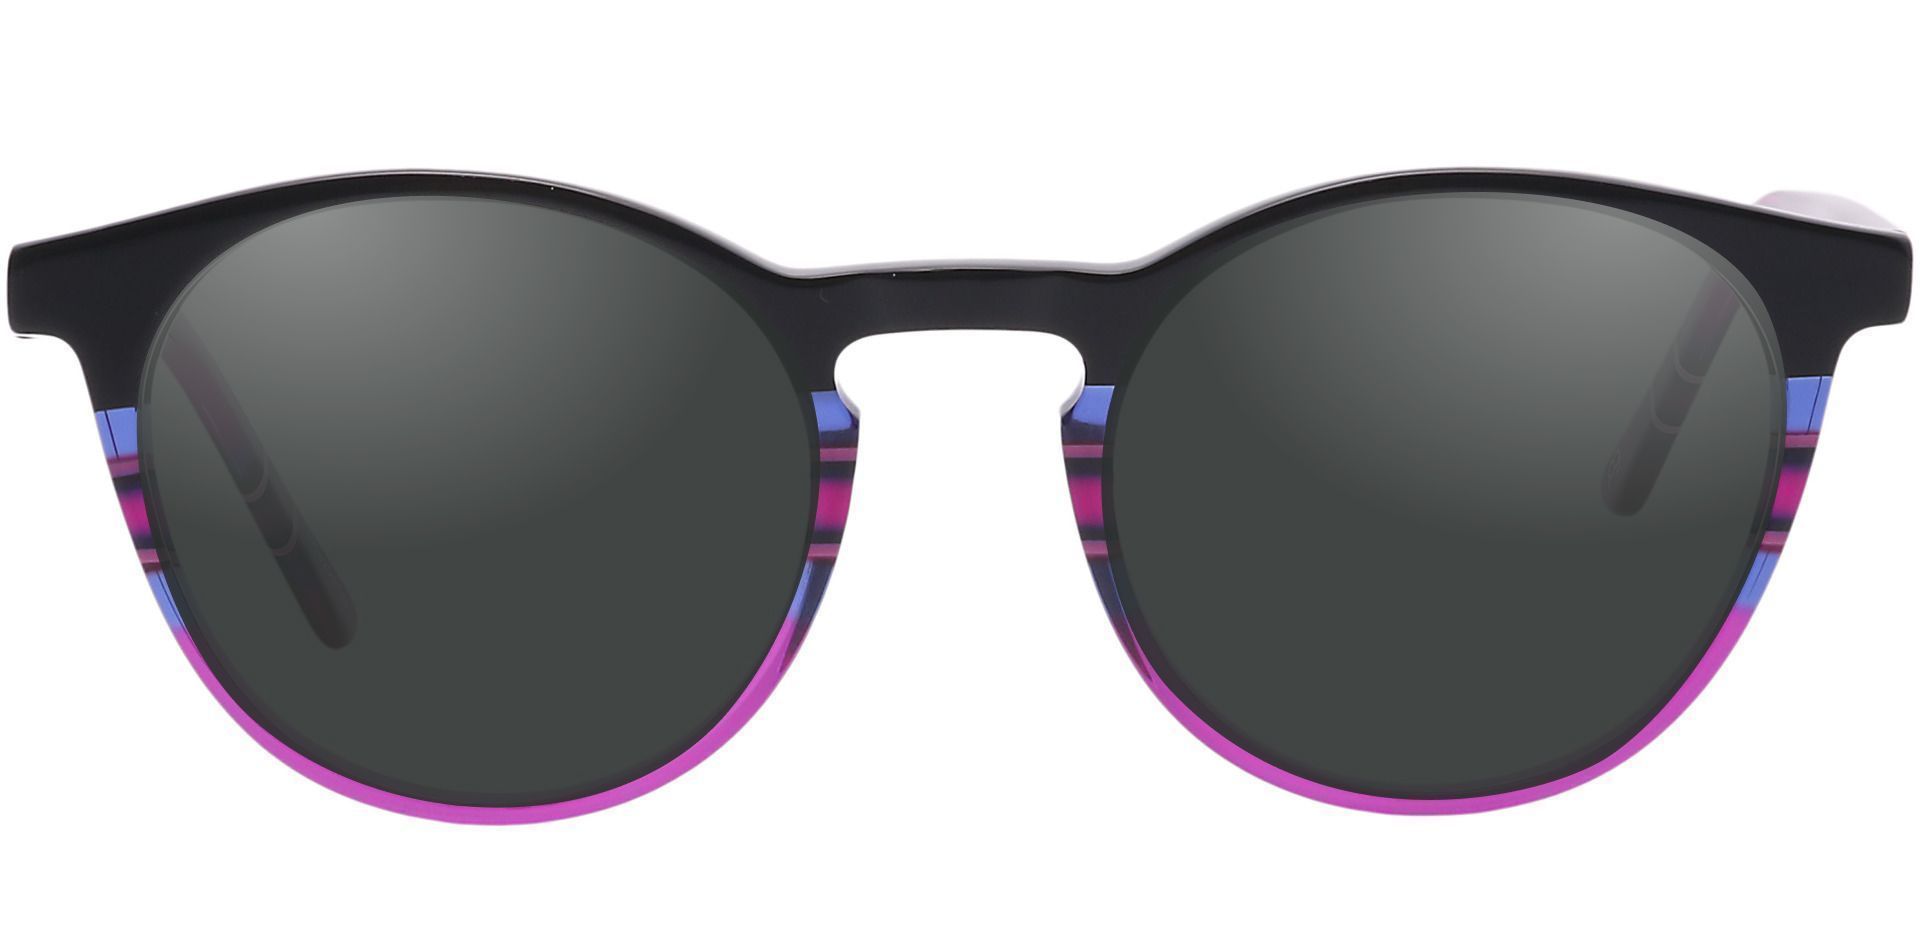 Jellie Round Prescription Sunglasses - Purple Frame With Gray Lenses